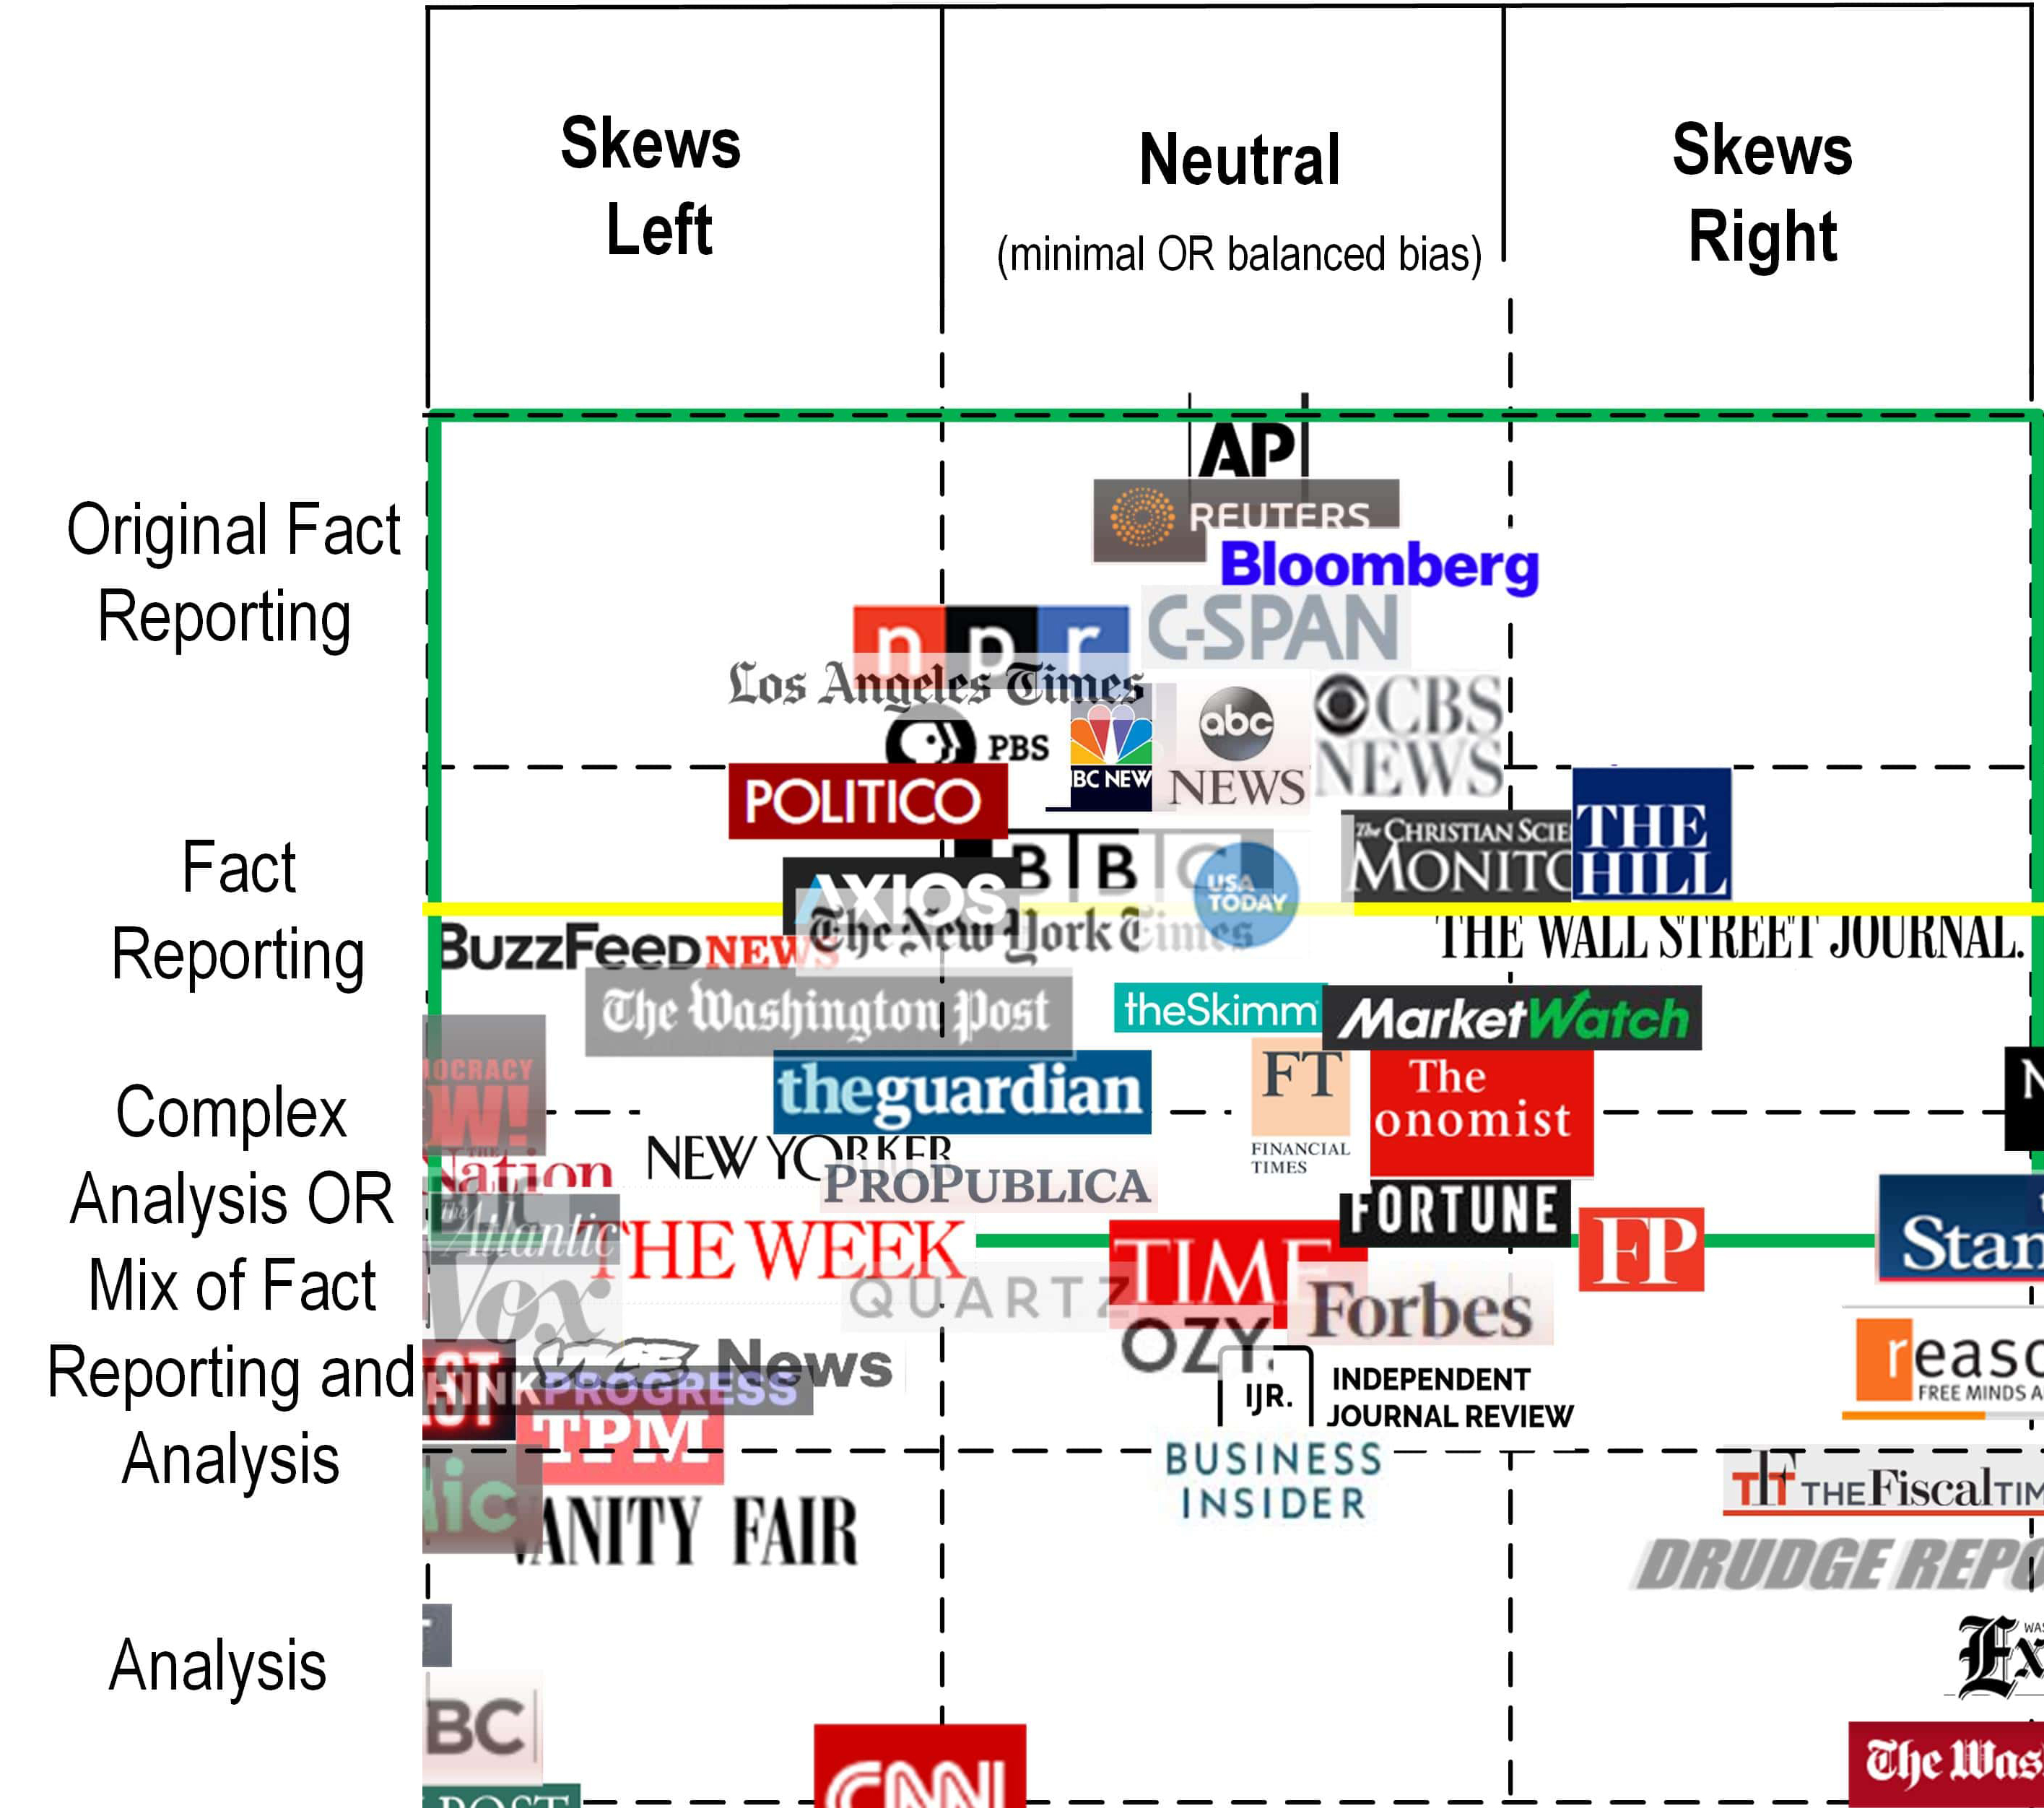 Media Bias Chart